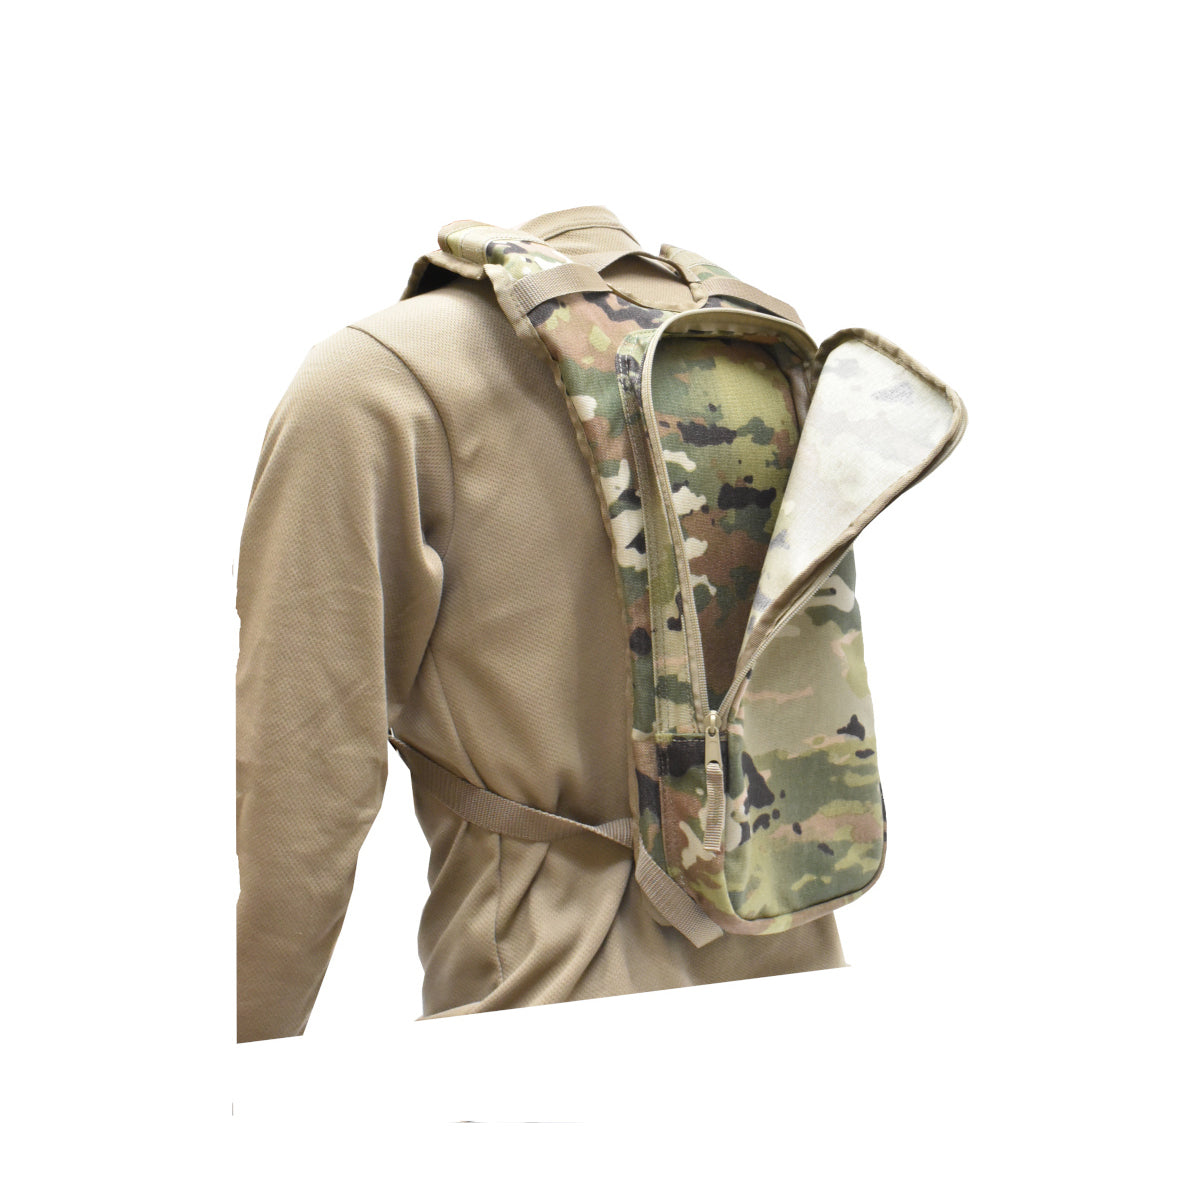 Hydration Backpack, large zipper storage pocket, OCP